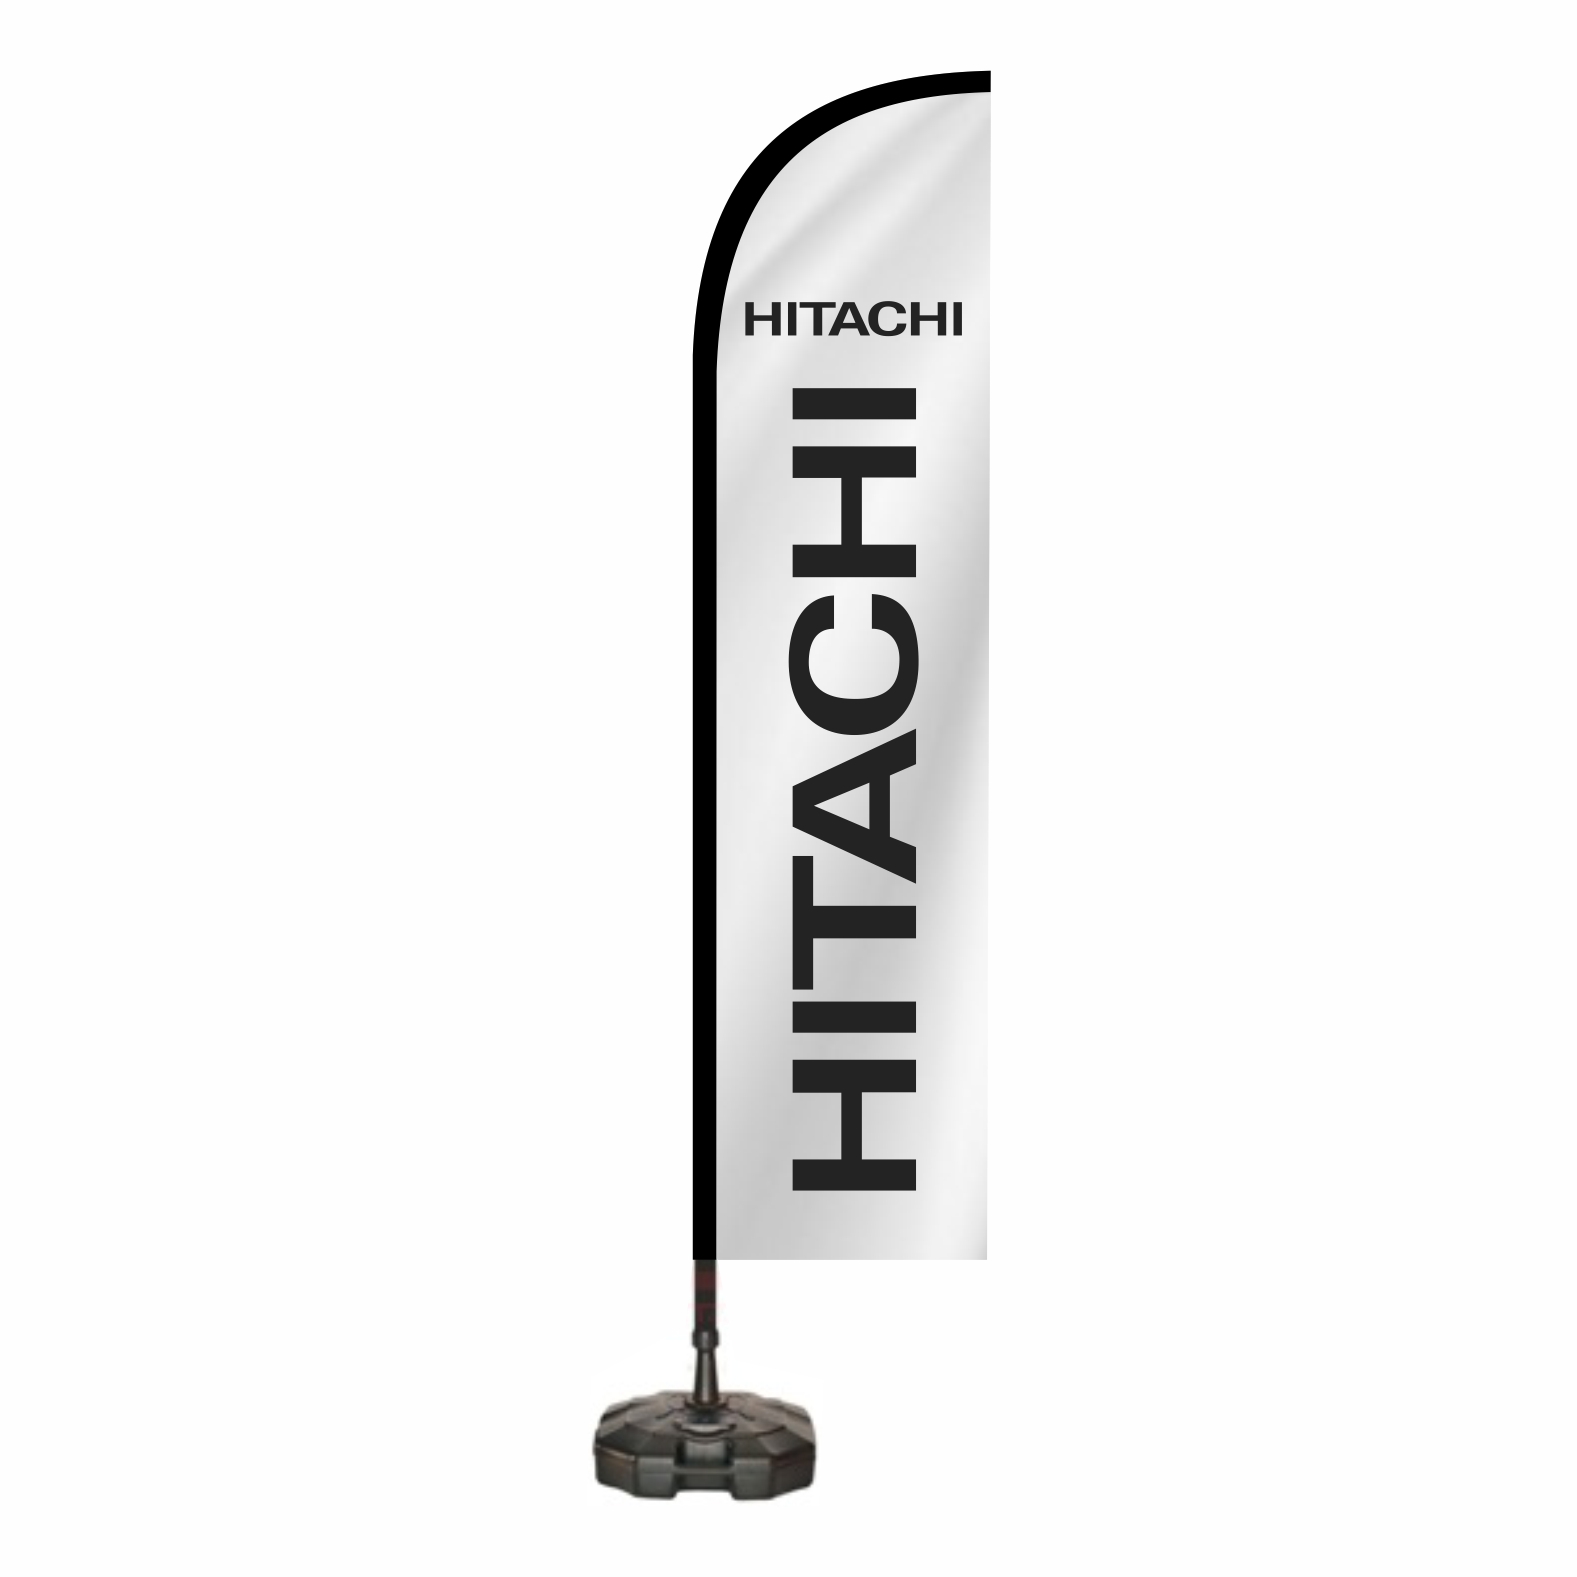 Hitachi Reklam Bayra Resimleri